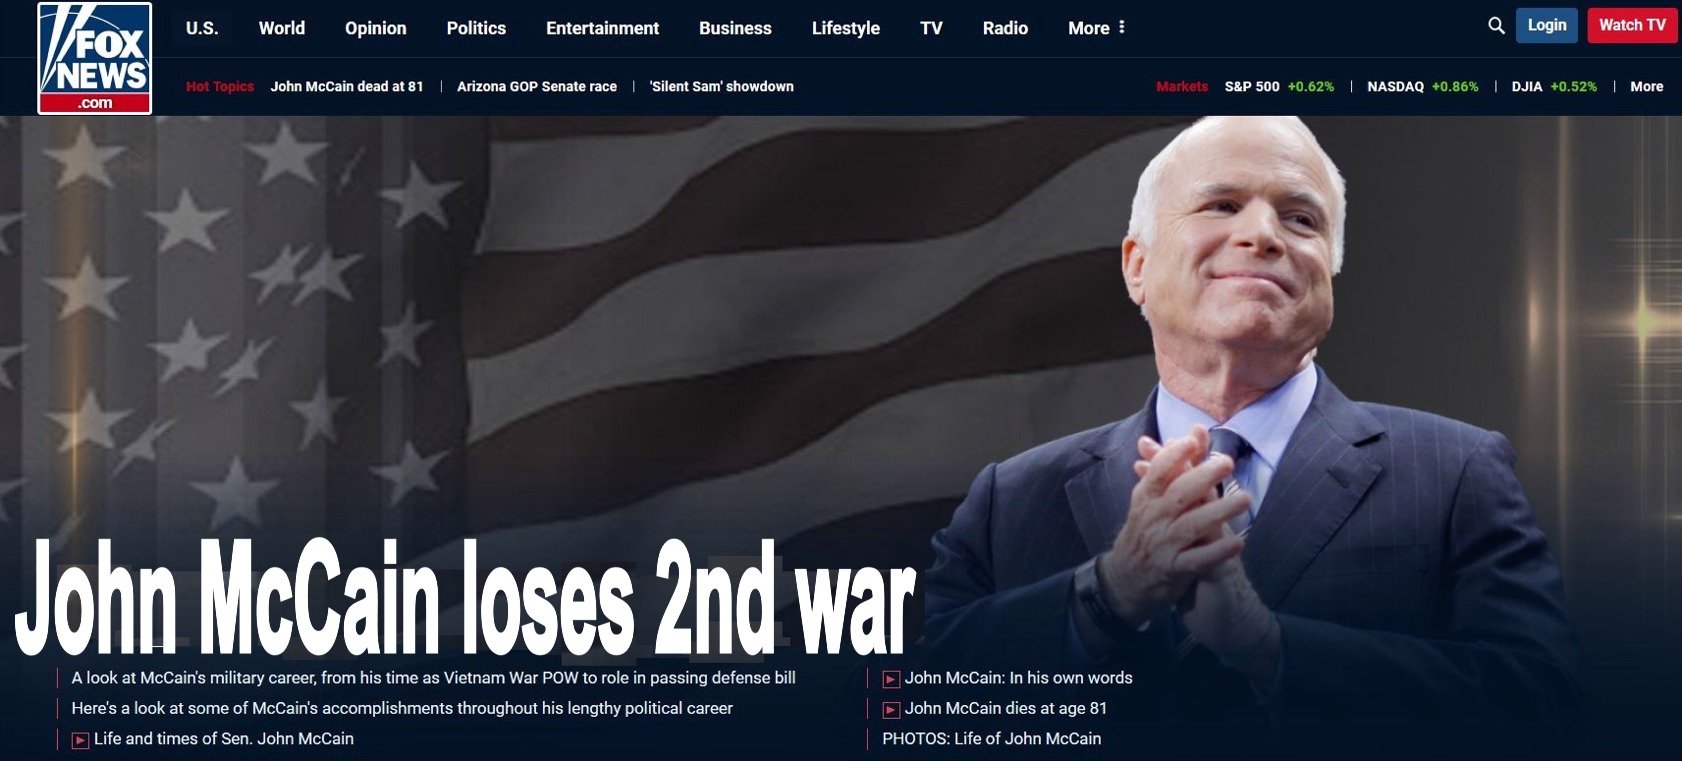 dank website - U.S. World Opinion Politics Entertainment Business Lifestyle Tv Radio More Login Watch Tv Fox Vnews Hot Topics John McCain dead at 81 | Arizona Gop Senate race 'Silent Sam' showdown Markets S&P 500 0.62% | Nasdaq 0.86% | Djia 0.52% More .co